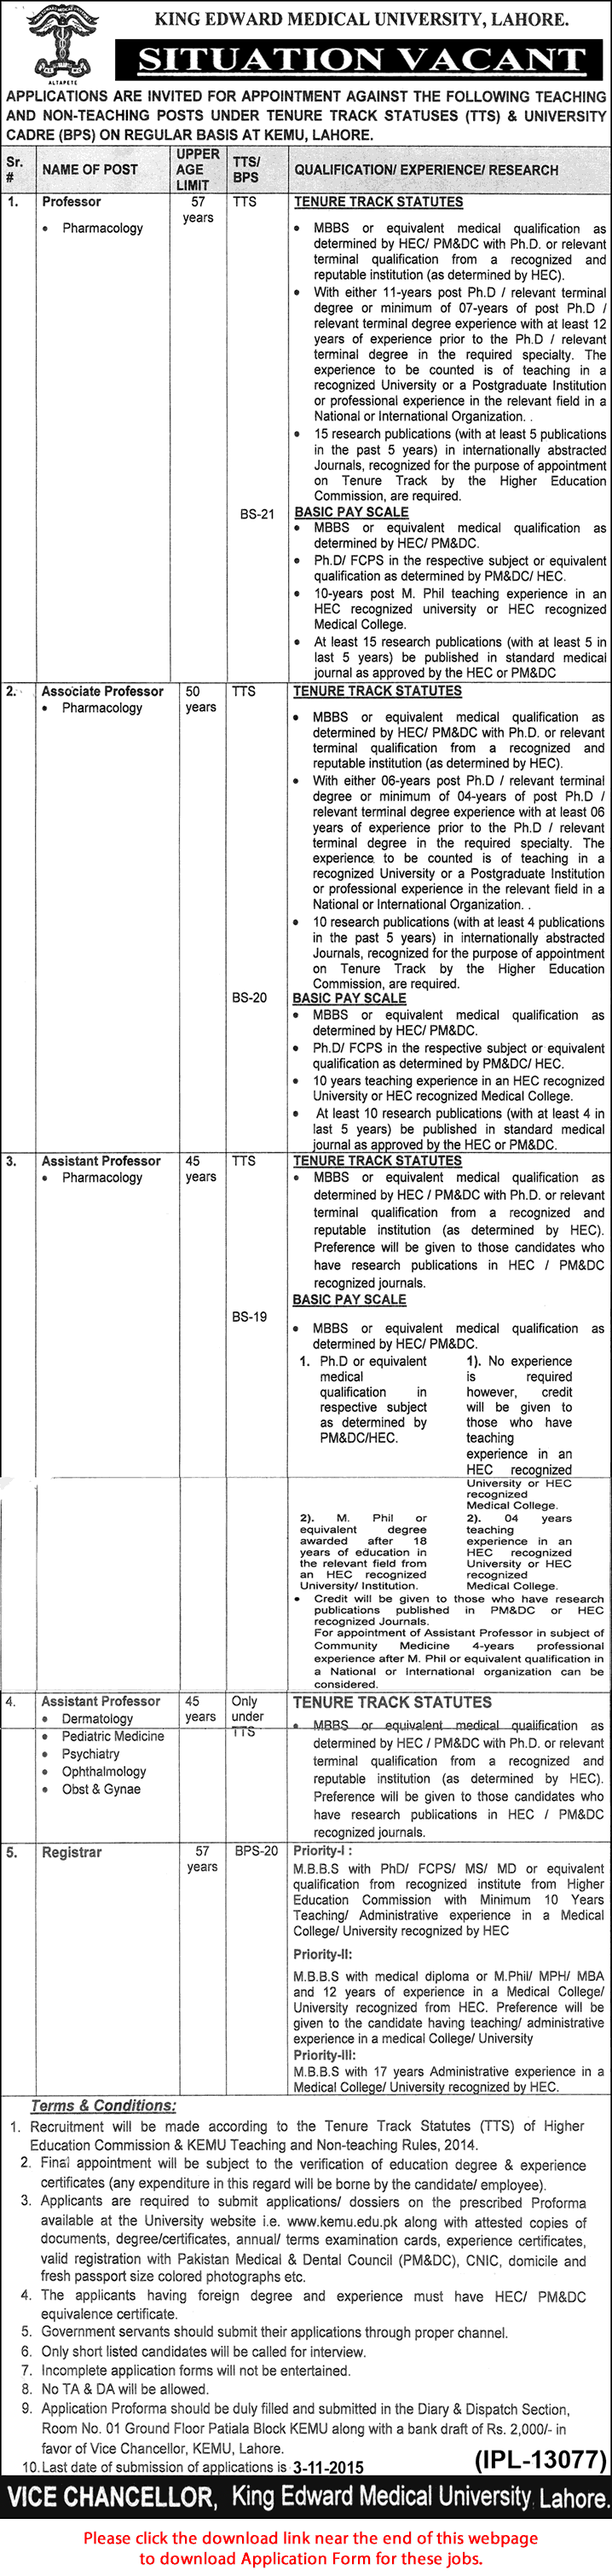 King Edward Medical University Lahore Jobs 2015 October KEMU Application Form Teaching Faculty